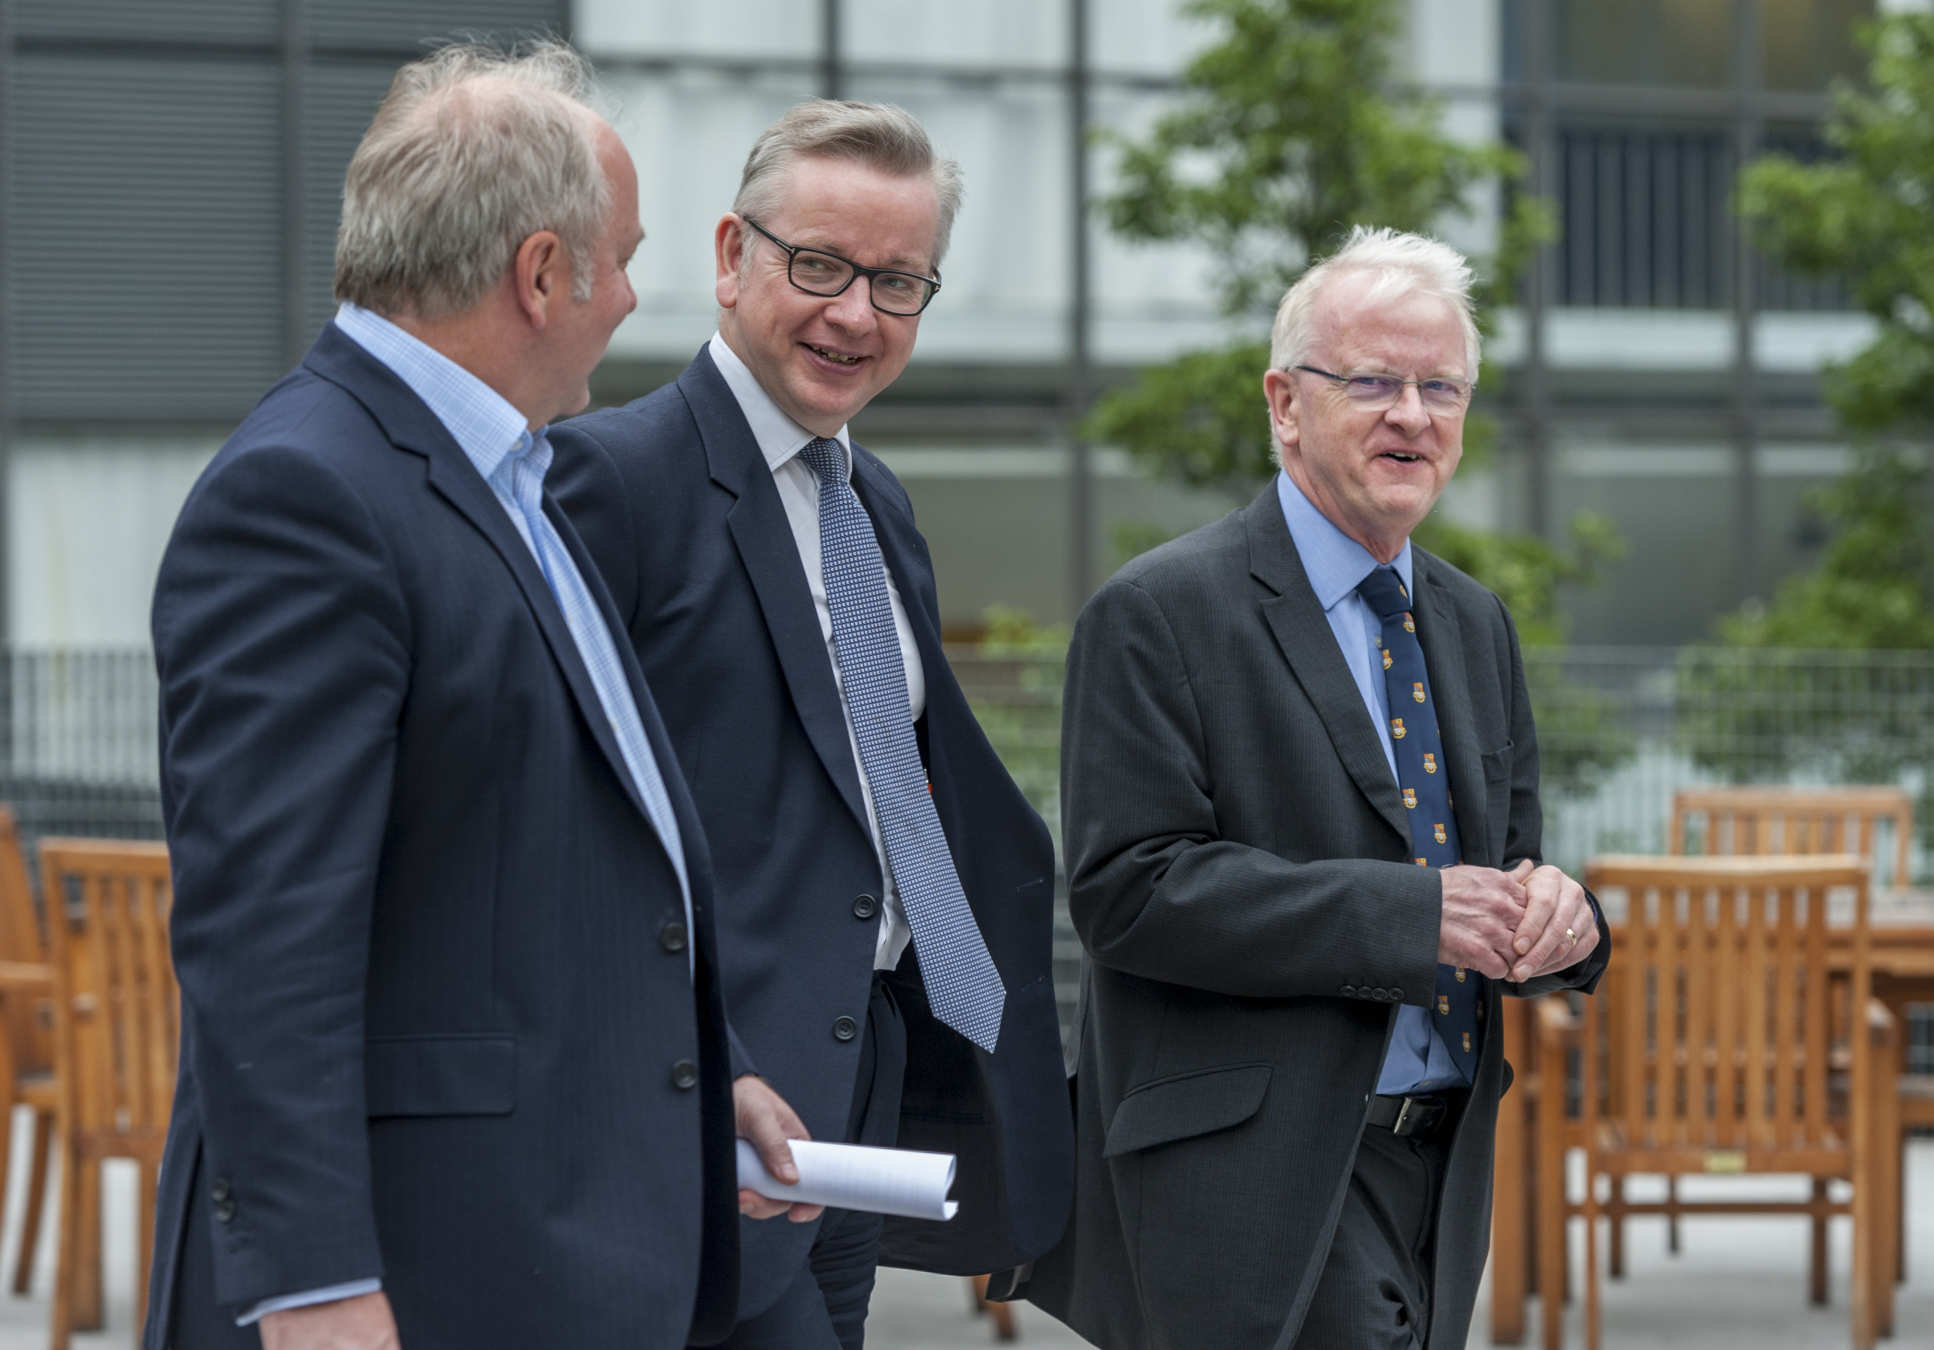 L-R: Professor Nick Jennings, Environment Secretary Michael Gove and former Provost James Stirling